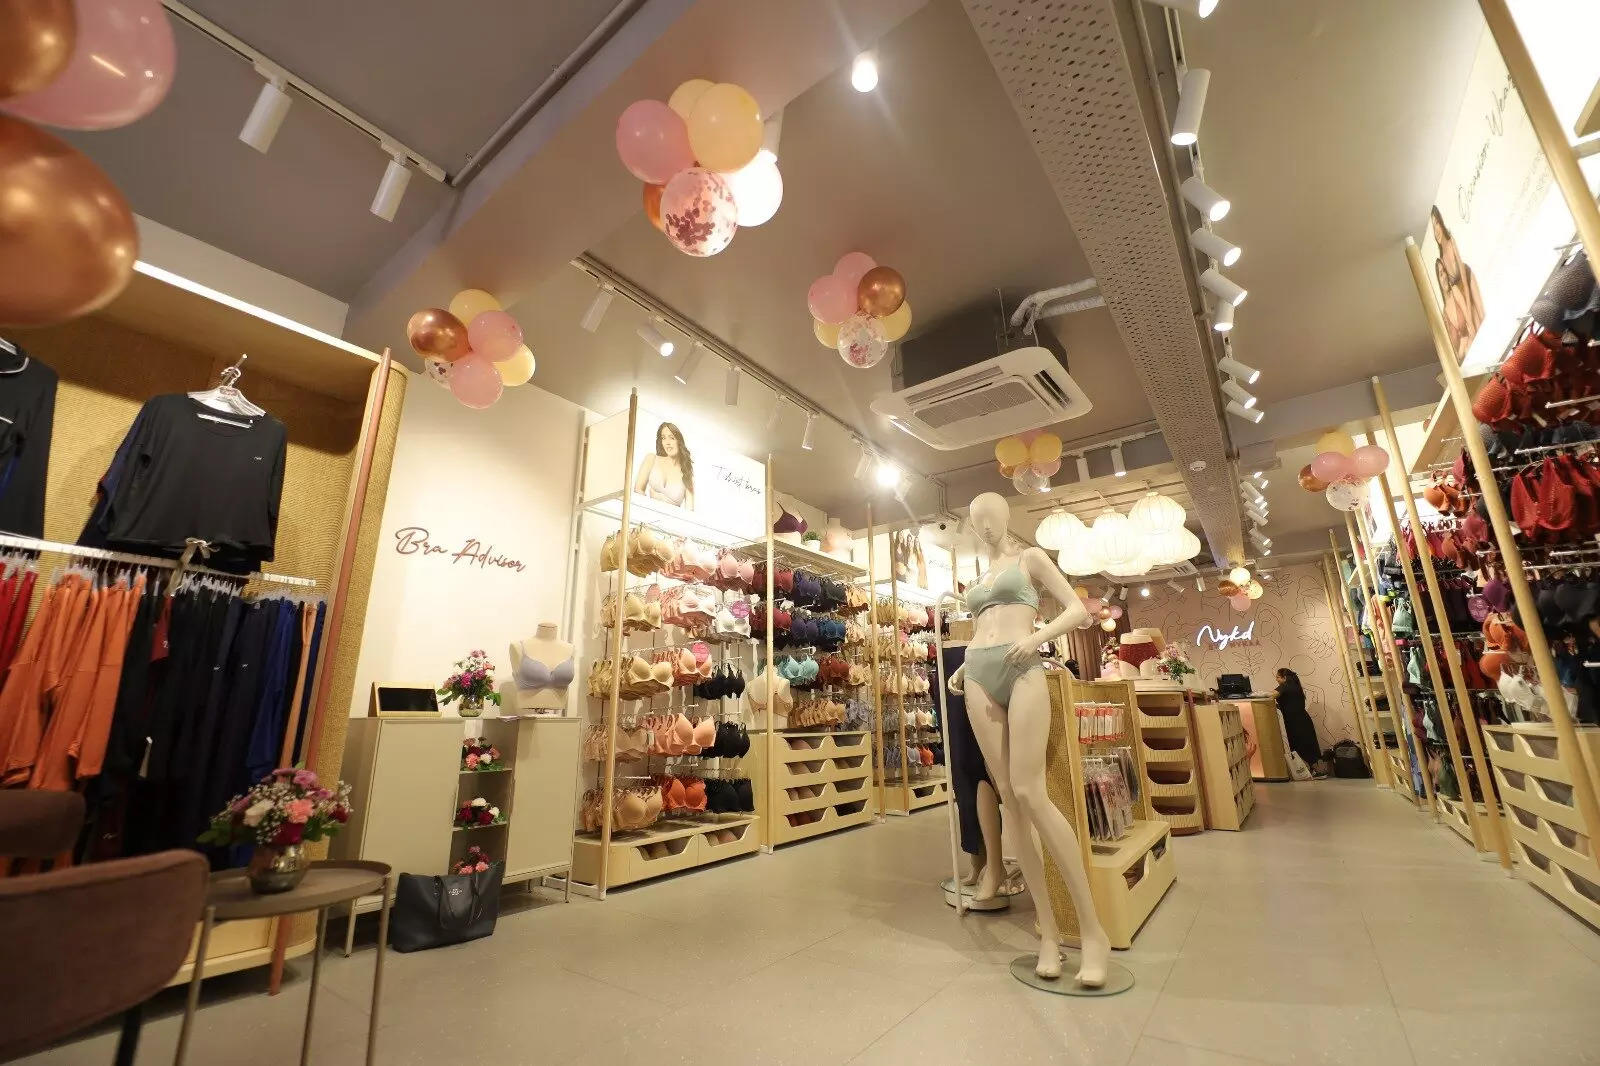 Nykaa Fashion: Nykaa's lingerie brand Nykd hits Rs 100 cr revenue